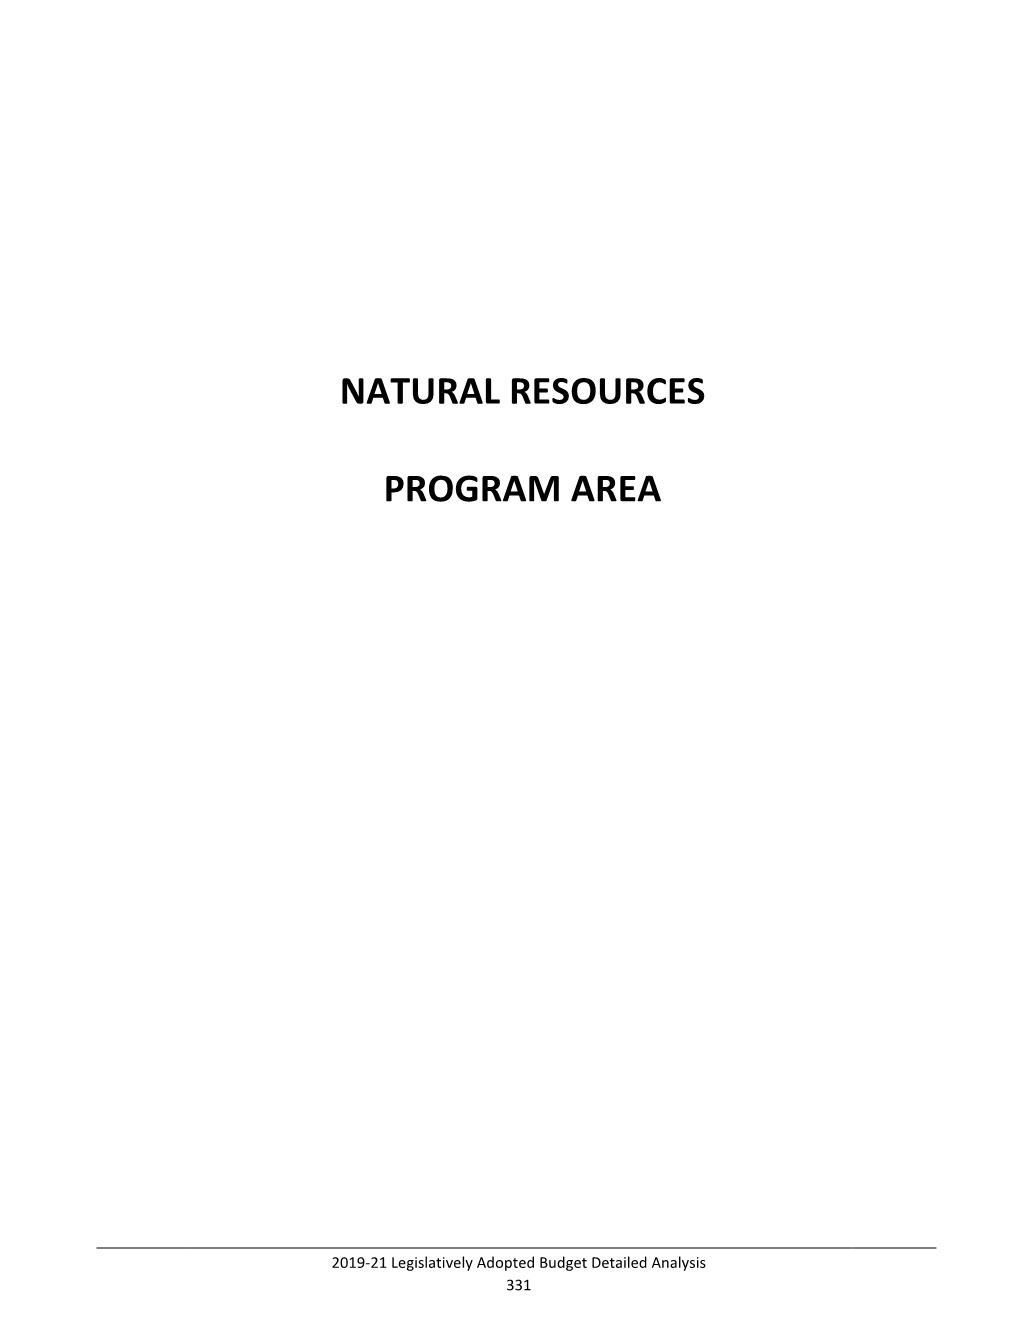 Natural Resources Program Area